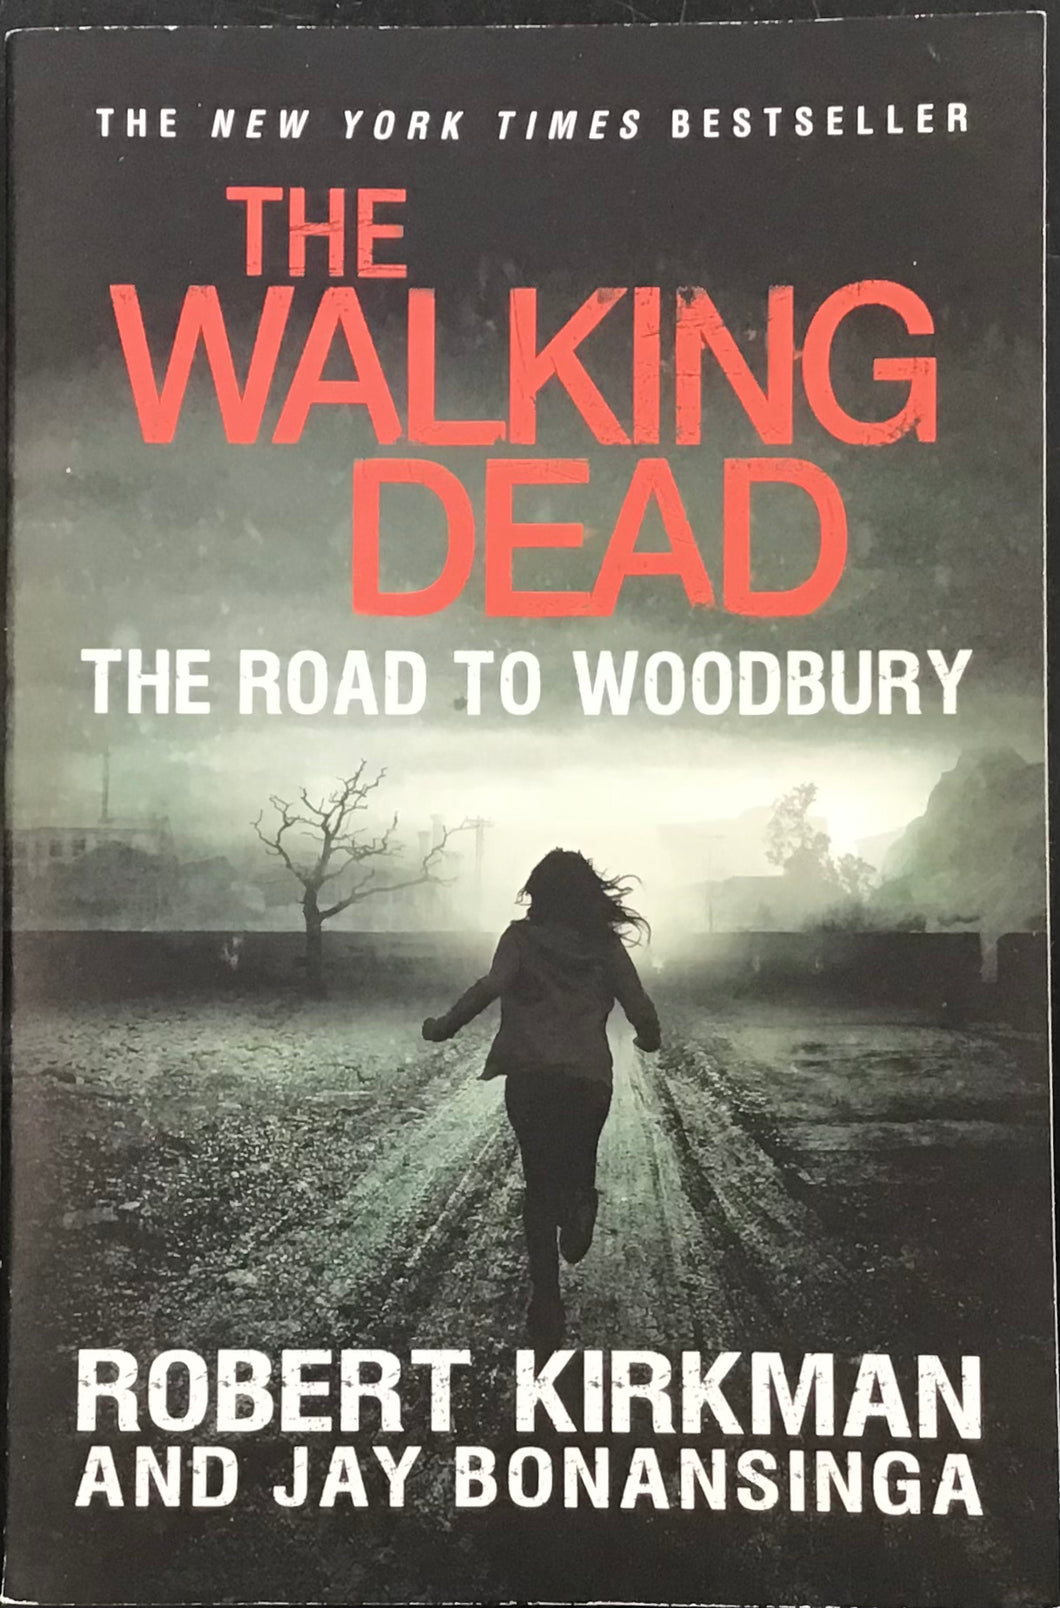 The Walking Dead, Robert Kirkman & Jay Bonansinga